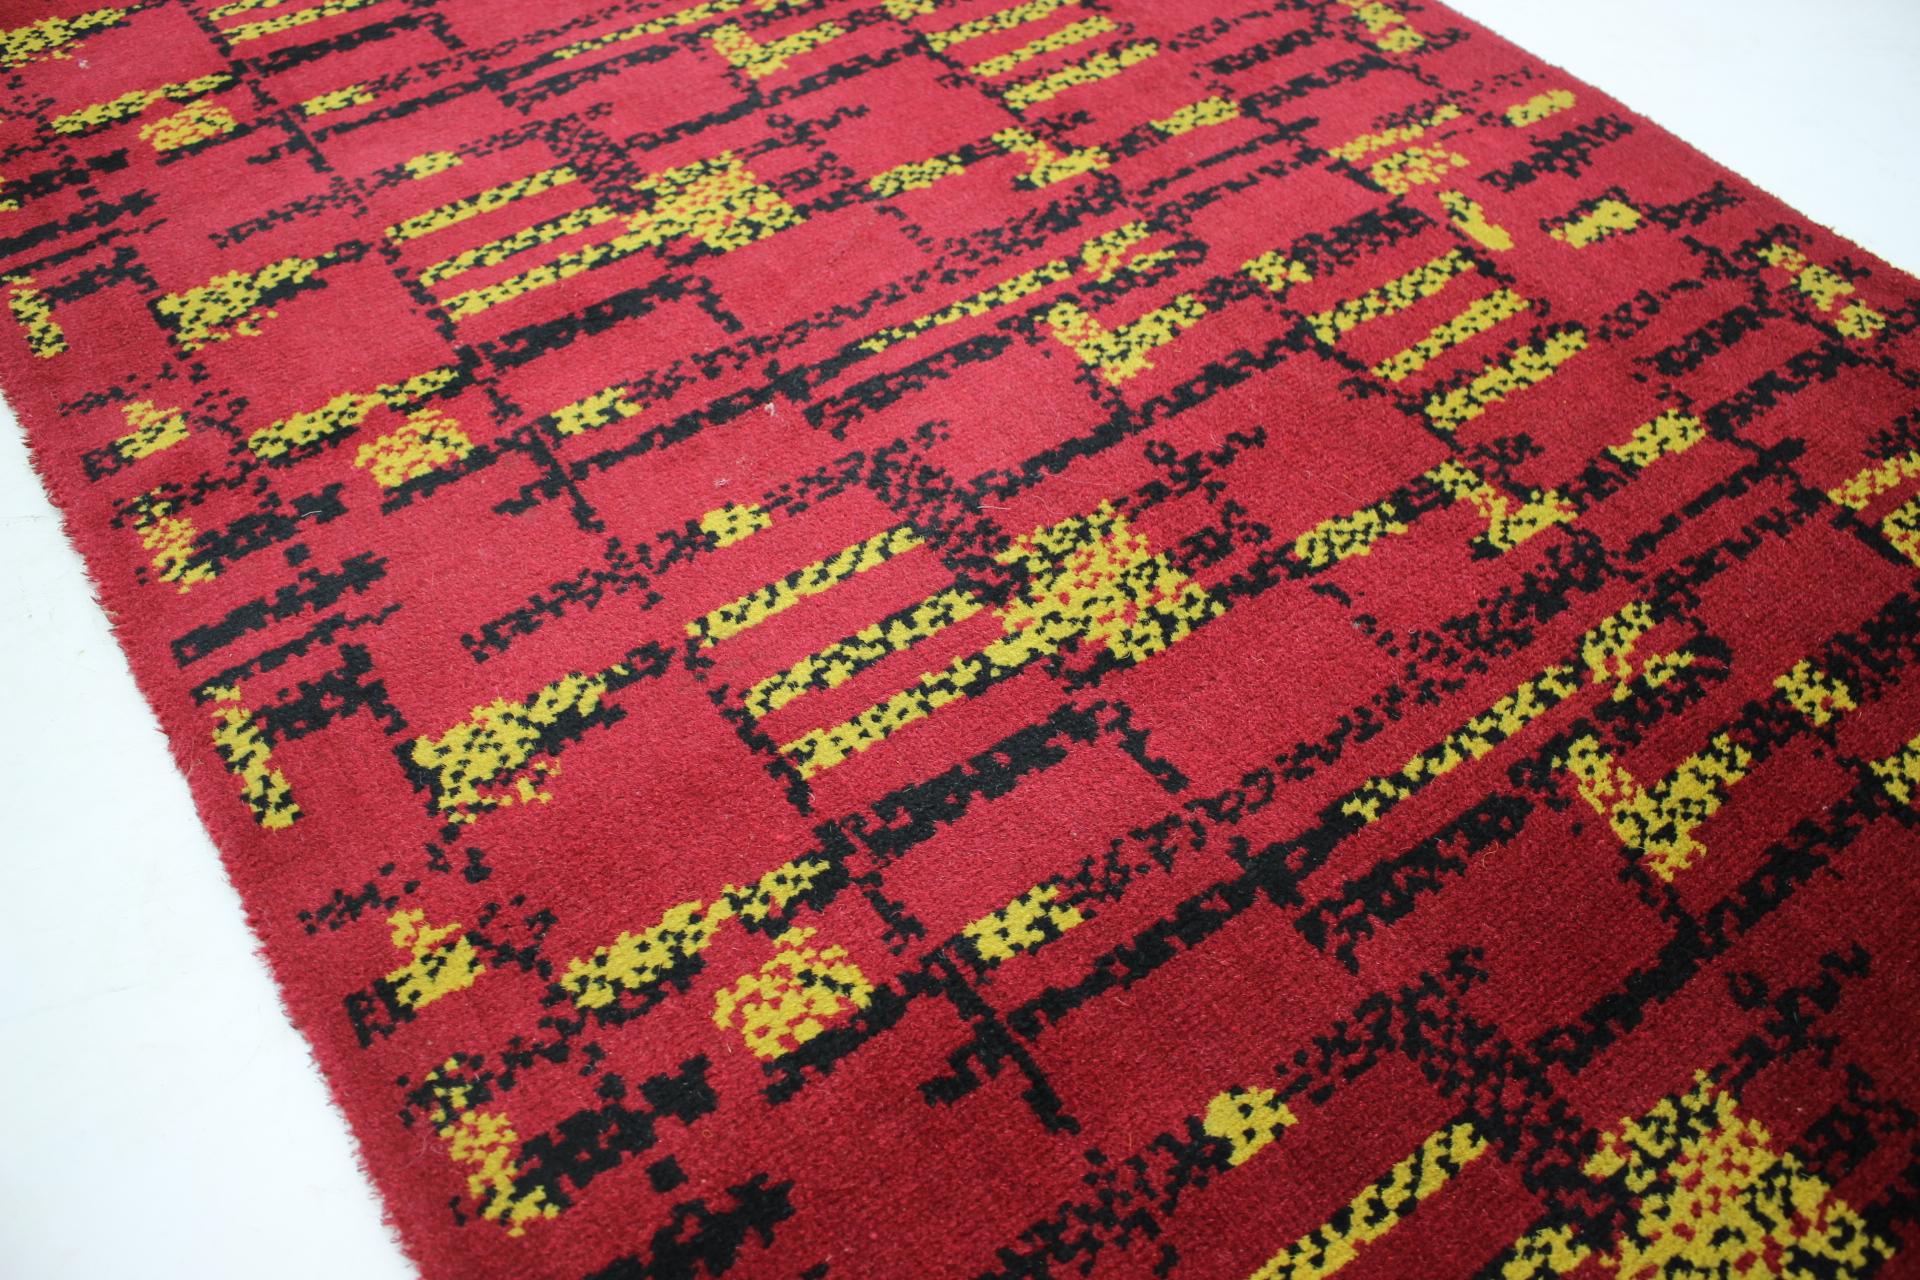 Mid-Century Modern Geometric Abstract Wool Bouclé Carpet / Rug-1950s / Czechoslovakia For Sale